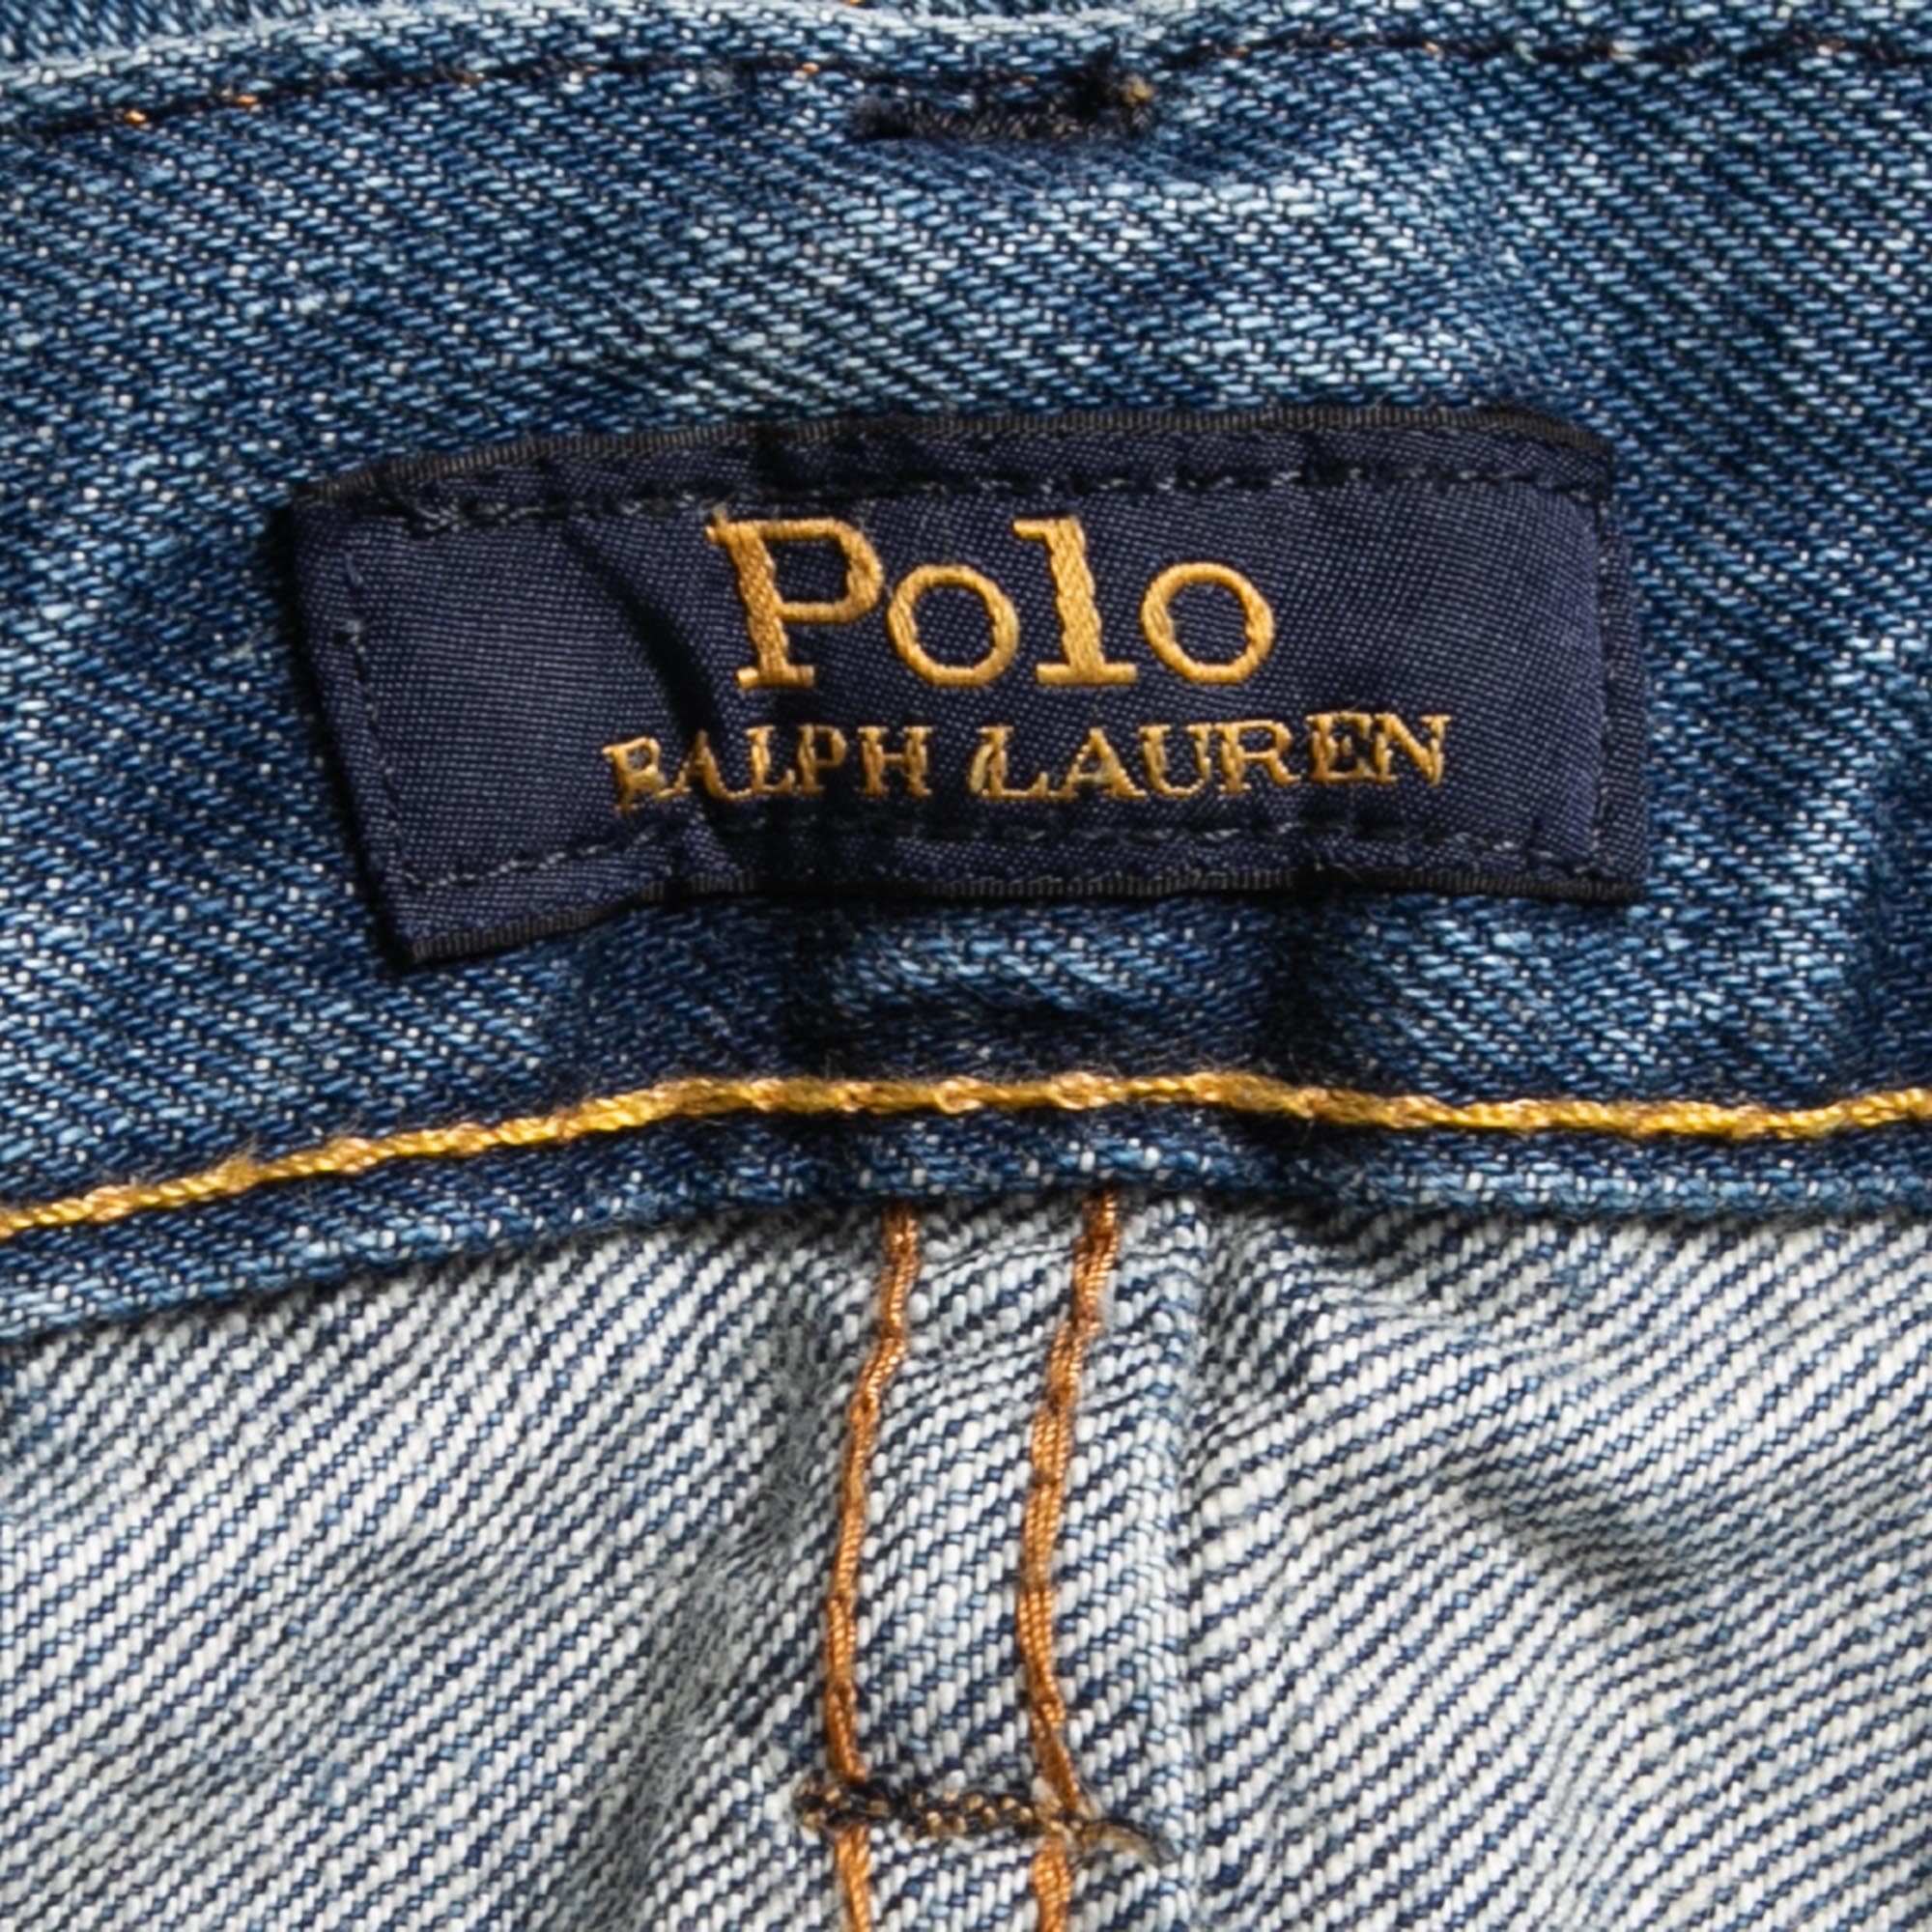 Polo Ralph Lauren Blue Washed & Distressed Denim The Varick Slim Straight Jeans M Waist 32